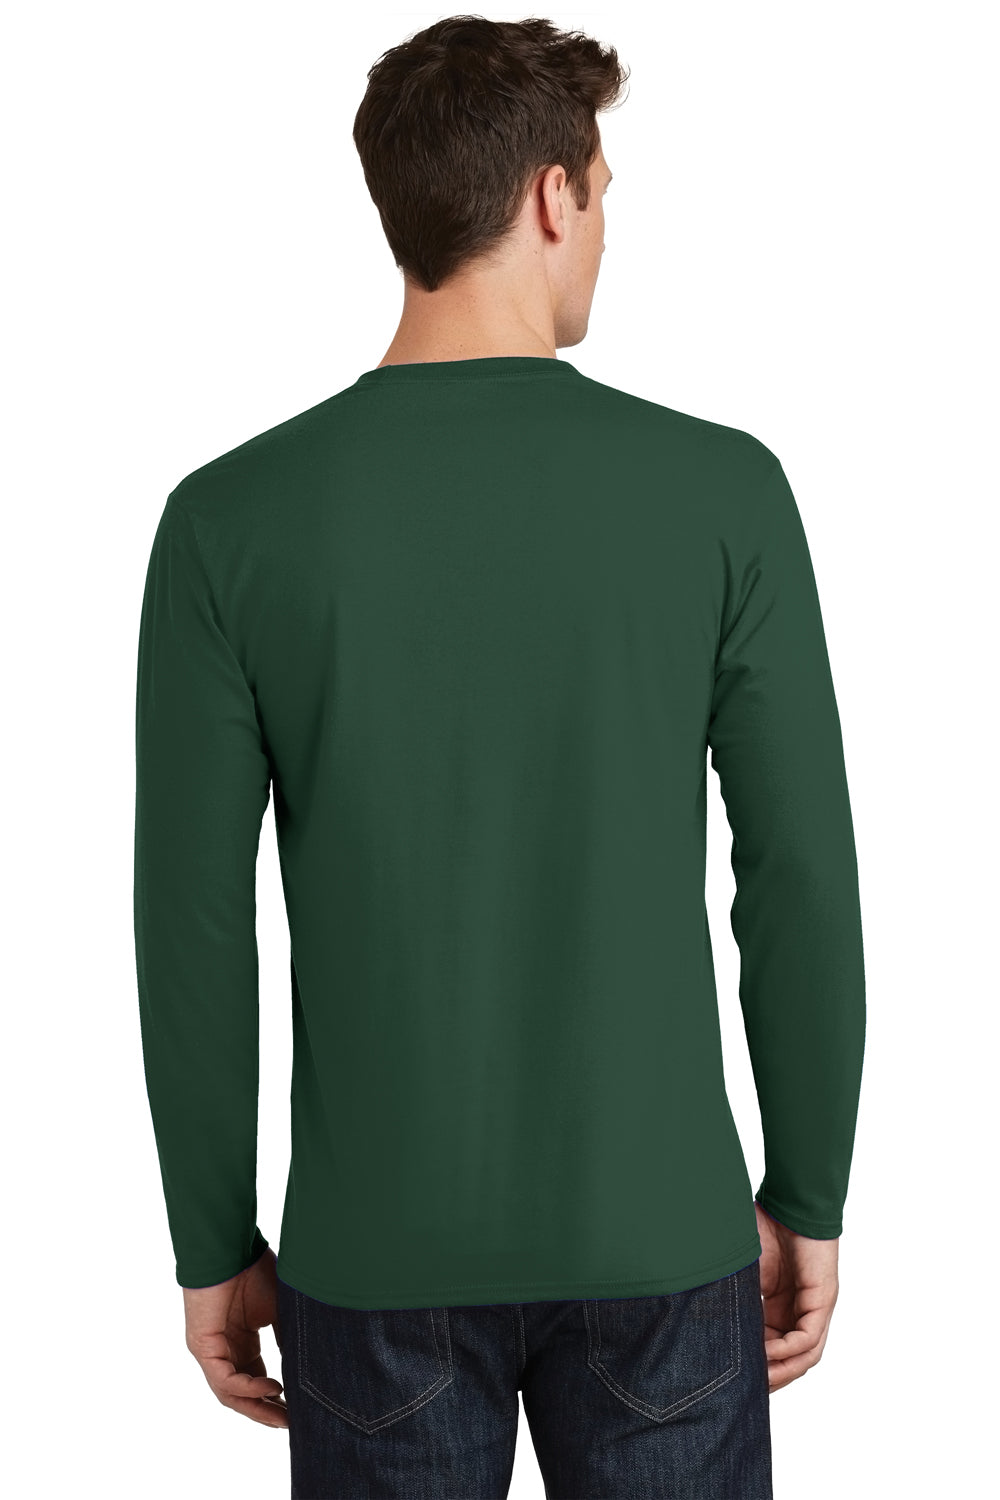 Port & Company PC450LS Mens Fan Favorite Long Sleeve Crewneck T-Shirt Forest Green Back